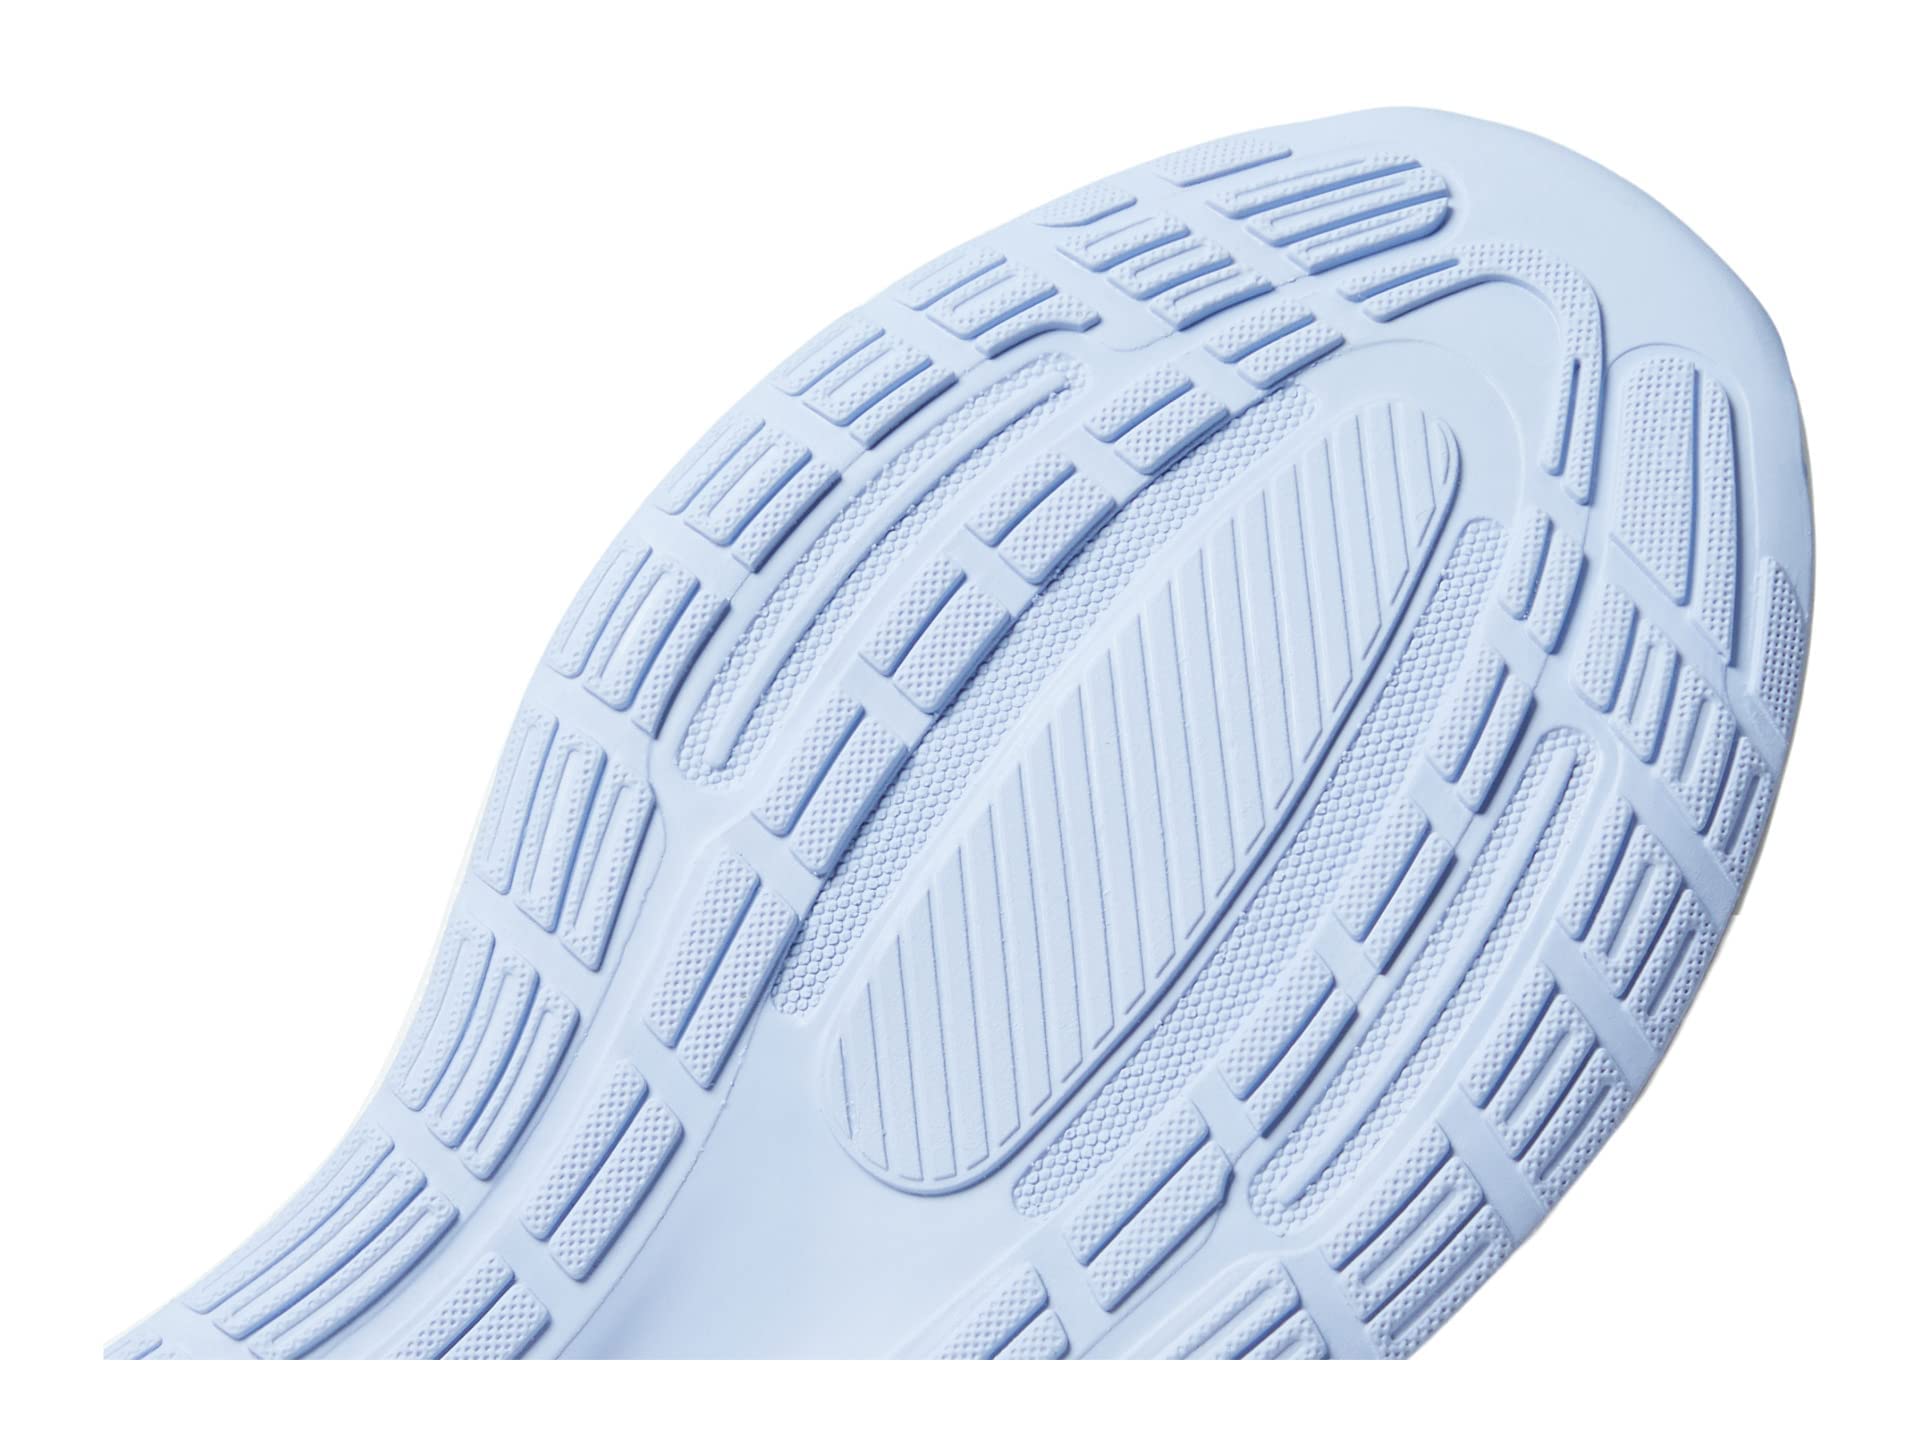 adidas Unisex-Child Run Falcon 3.0 Shoe